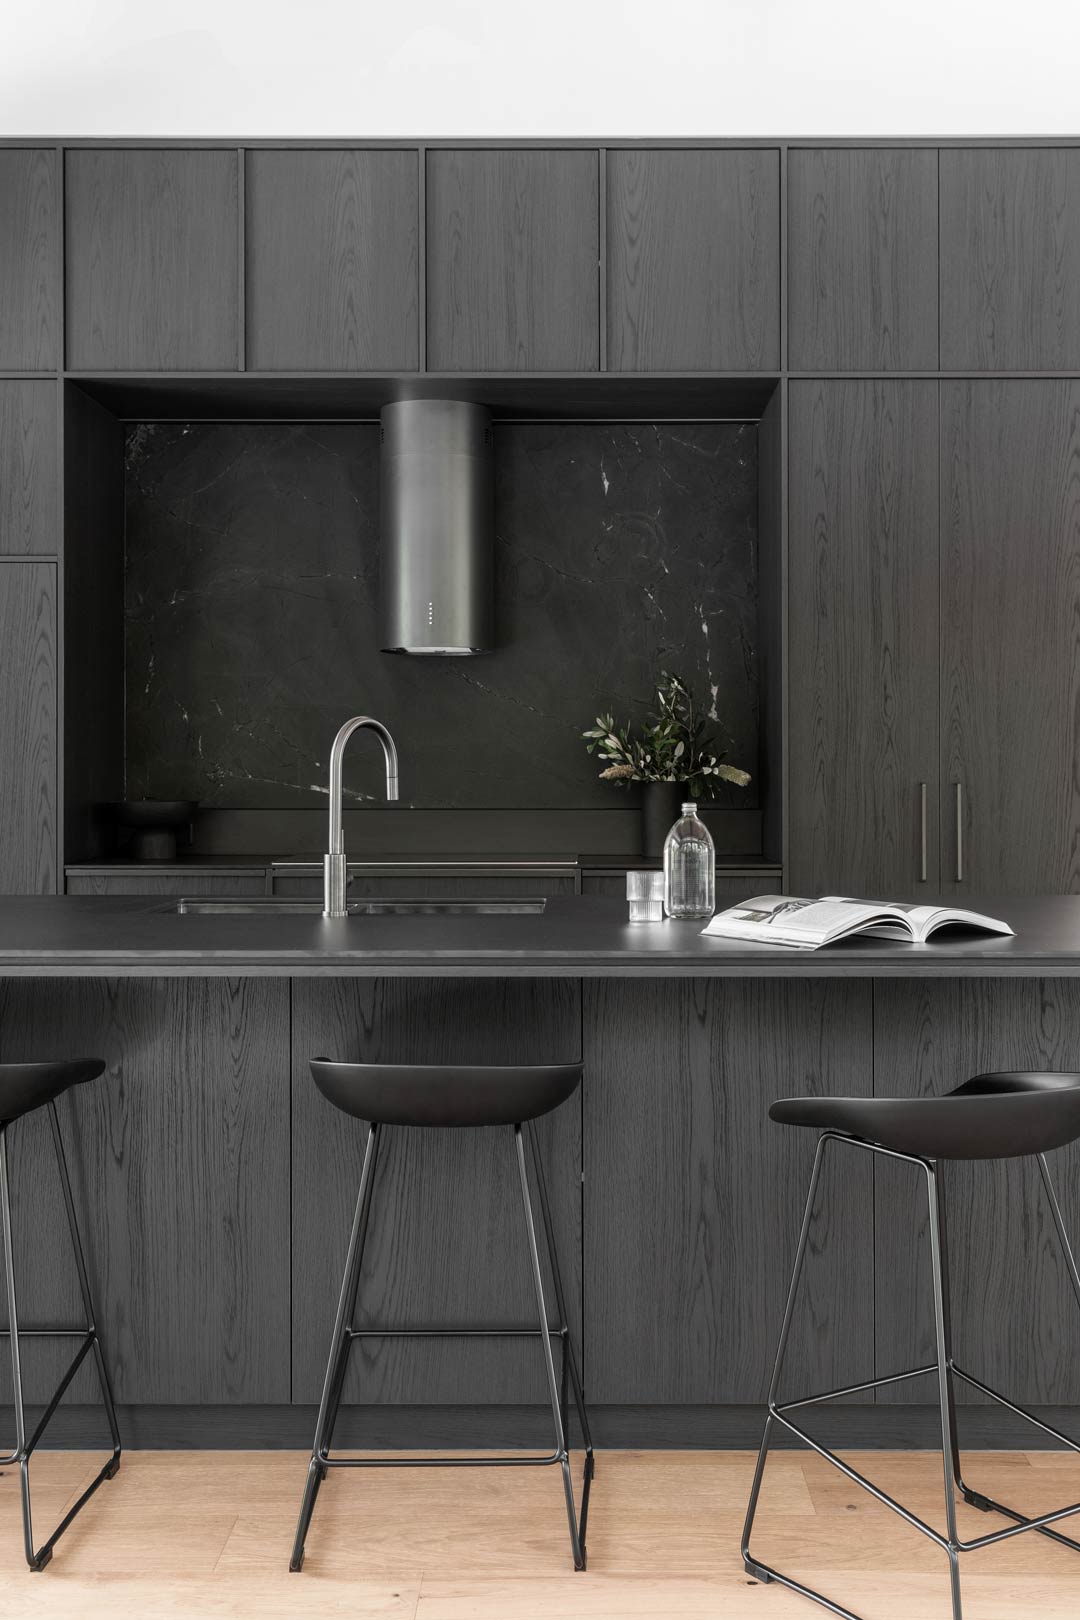 A dark monochromatic colour scheme kitchen with natural elements